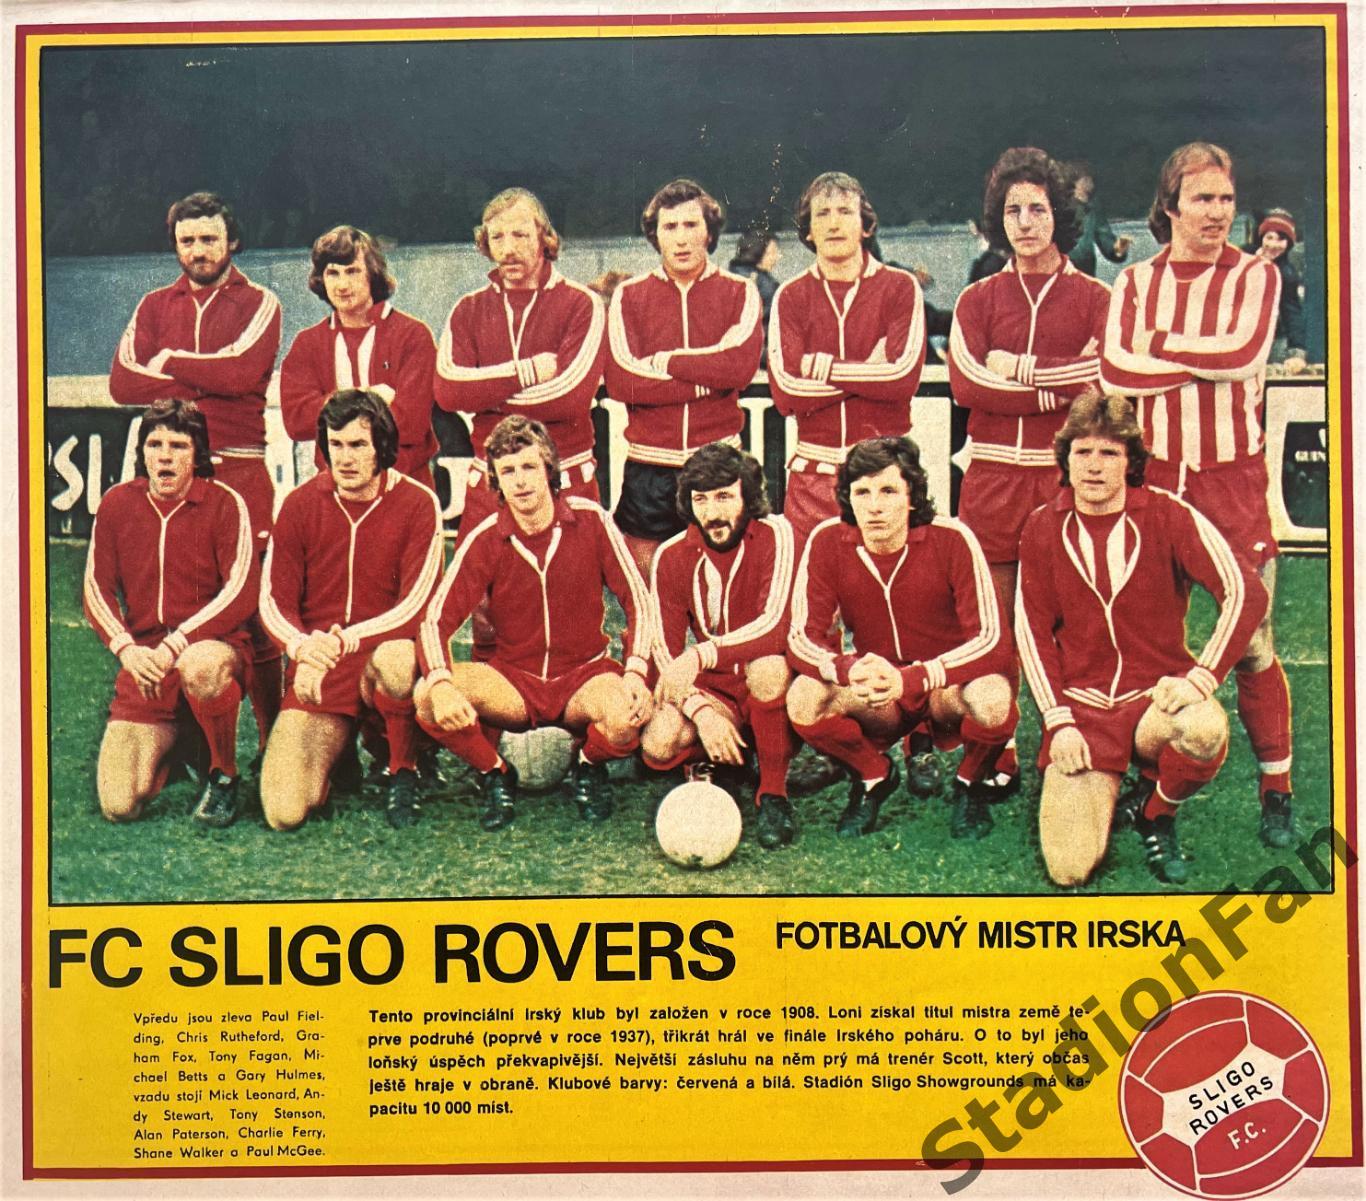 Постер из журнала Стадион (Stadion) - Sligo Rovers, 1978.